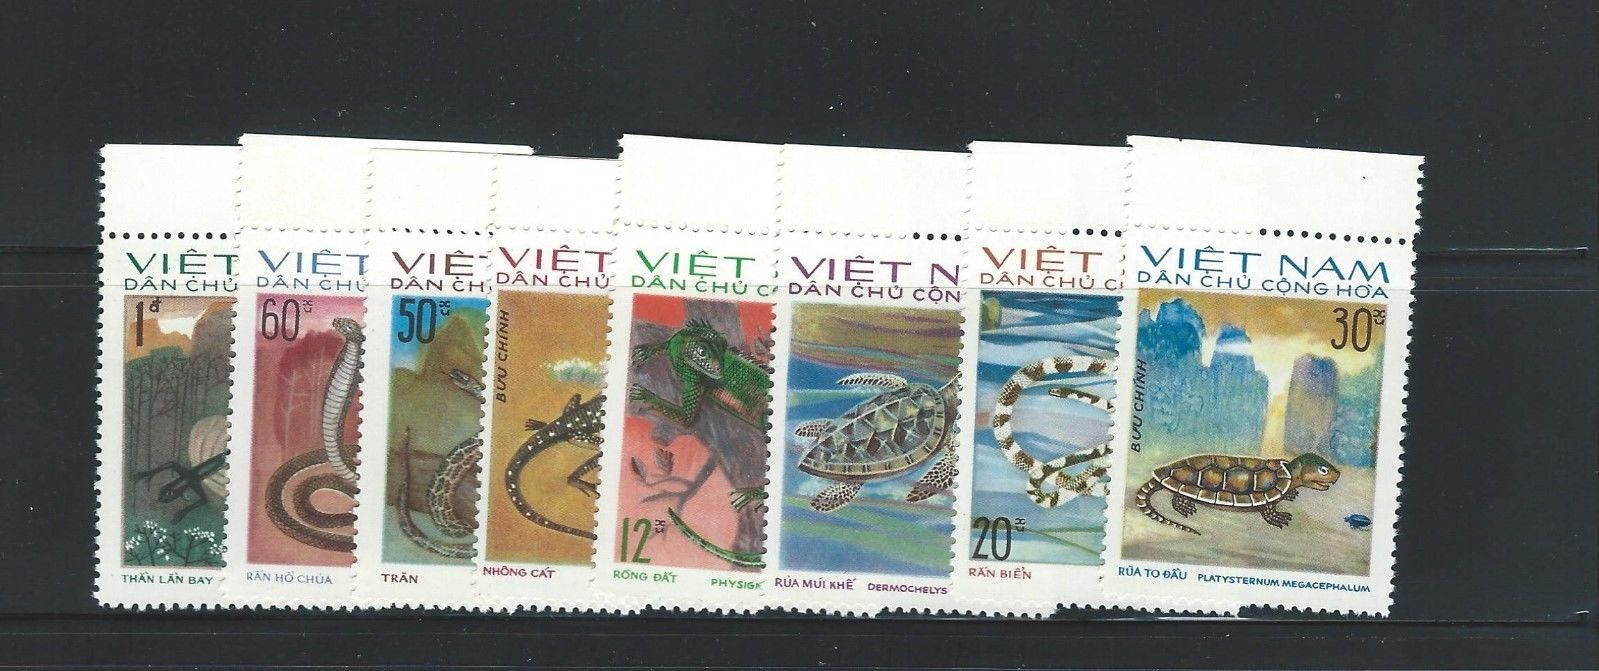 Vietnam - Scott # 790-797 (Reptiles)  MNH